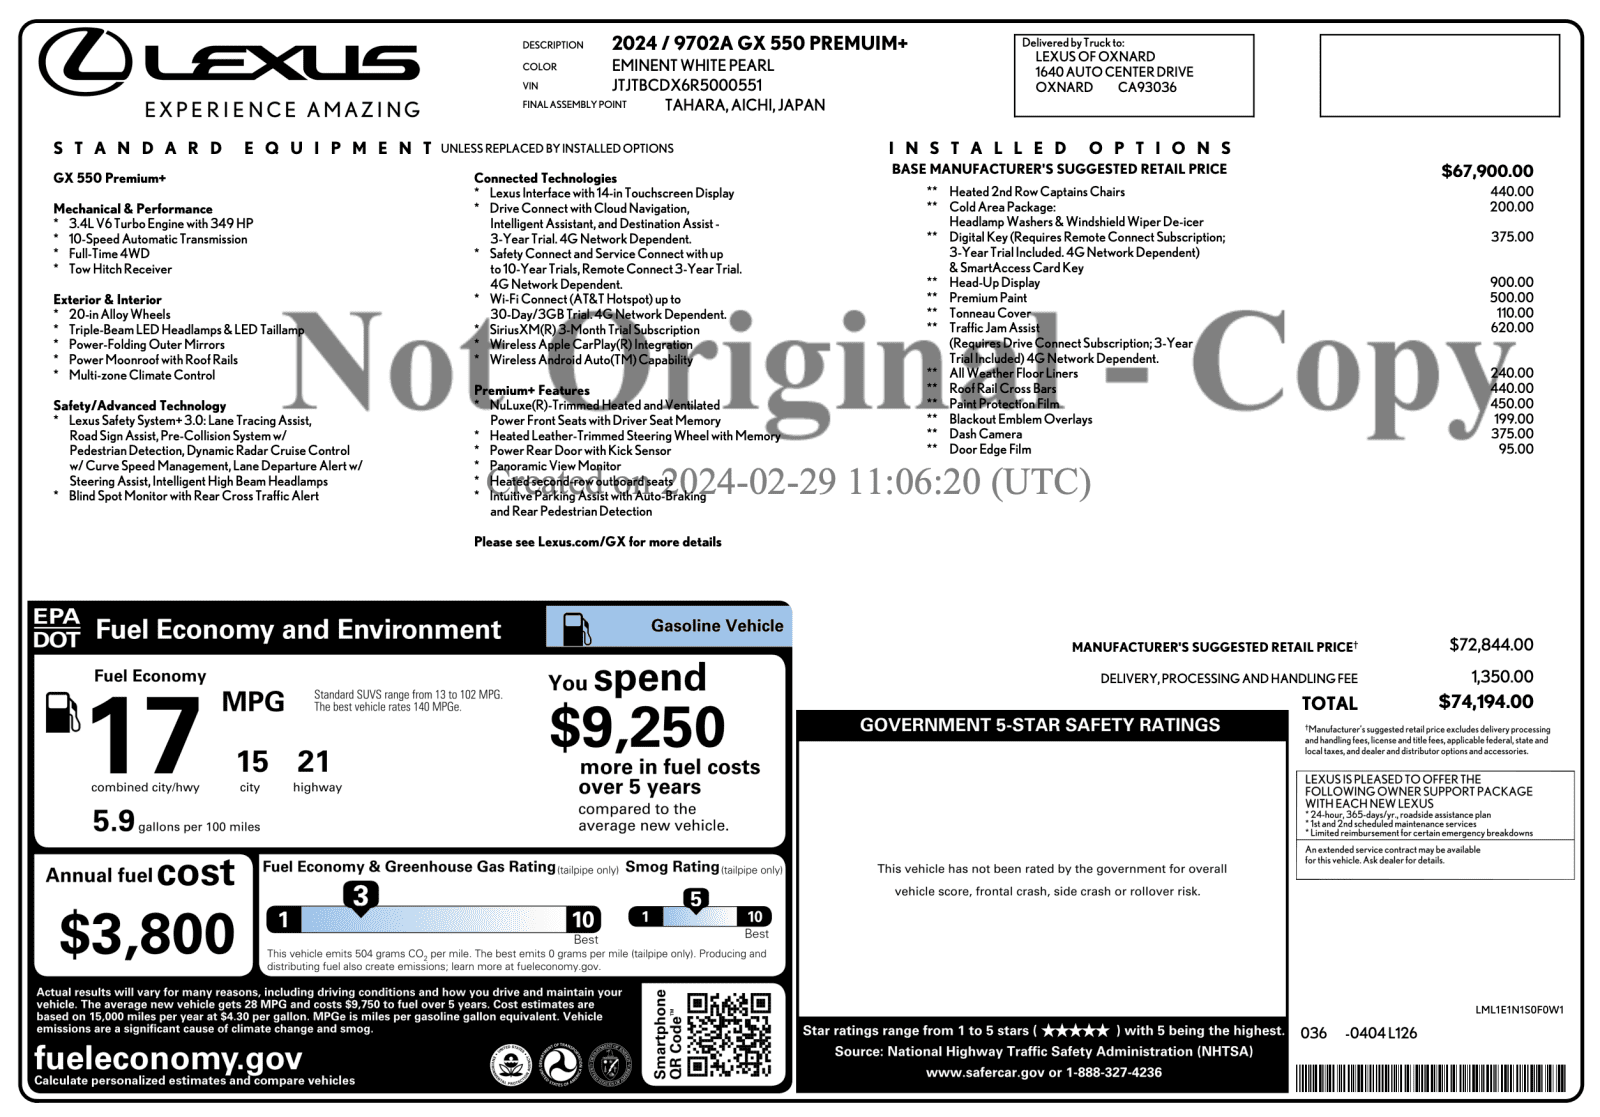 gx550-premium-plus-window-sticker.png